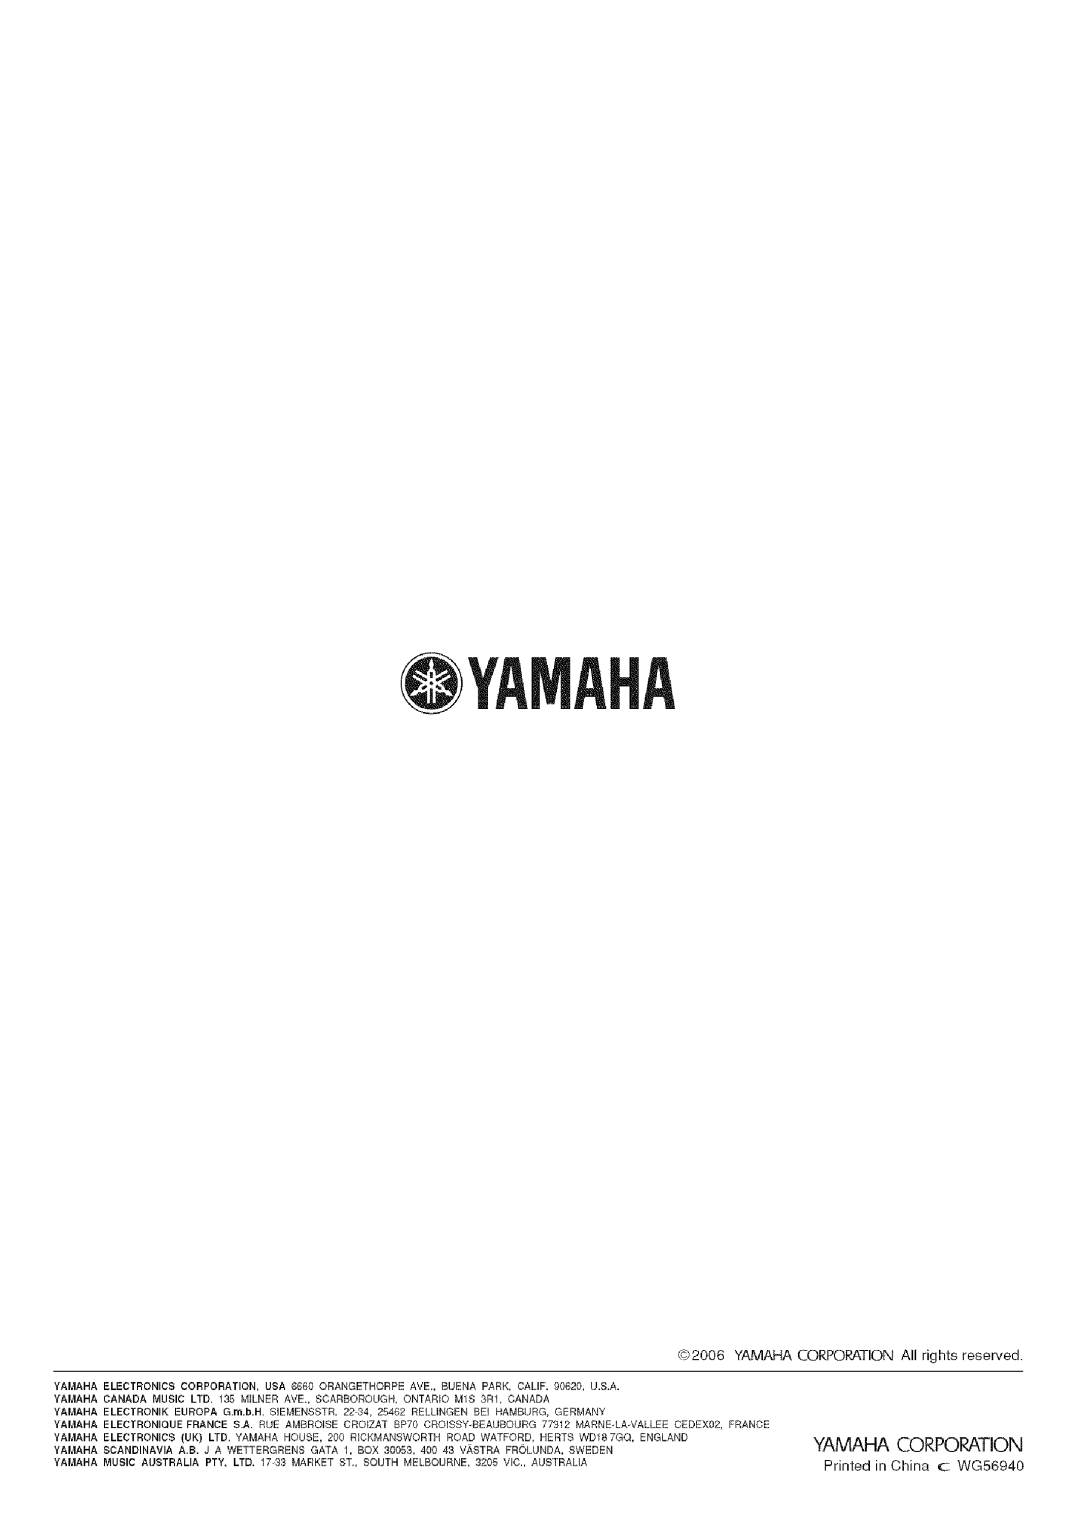 Yamaha SW012 manual @Yamaha, Corporation, @2006 YAMAHA CORPORATION All rights reserved 